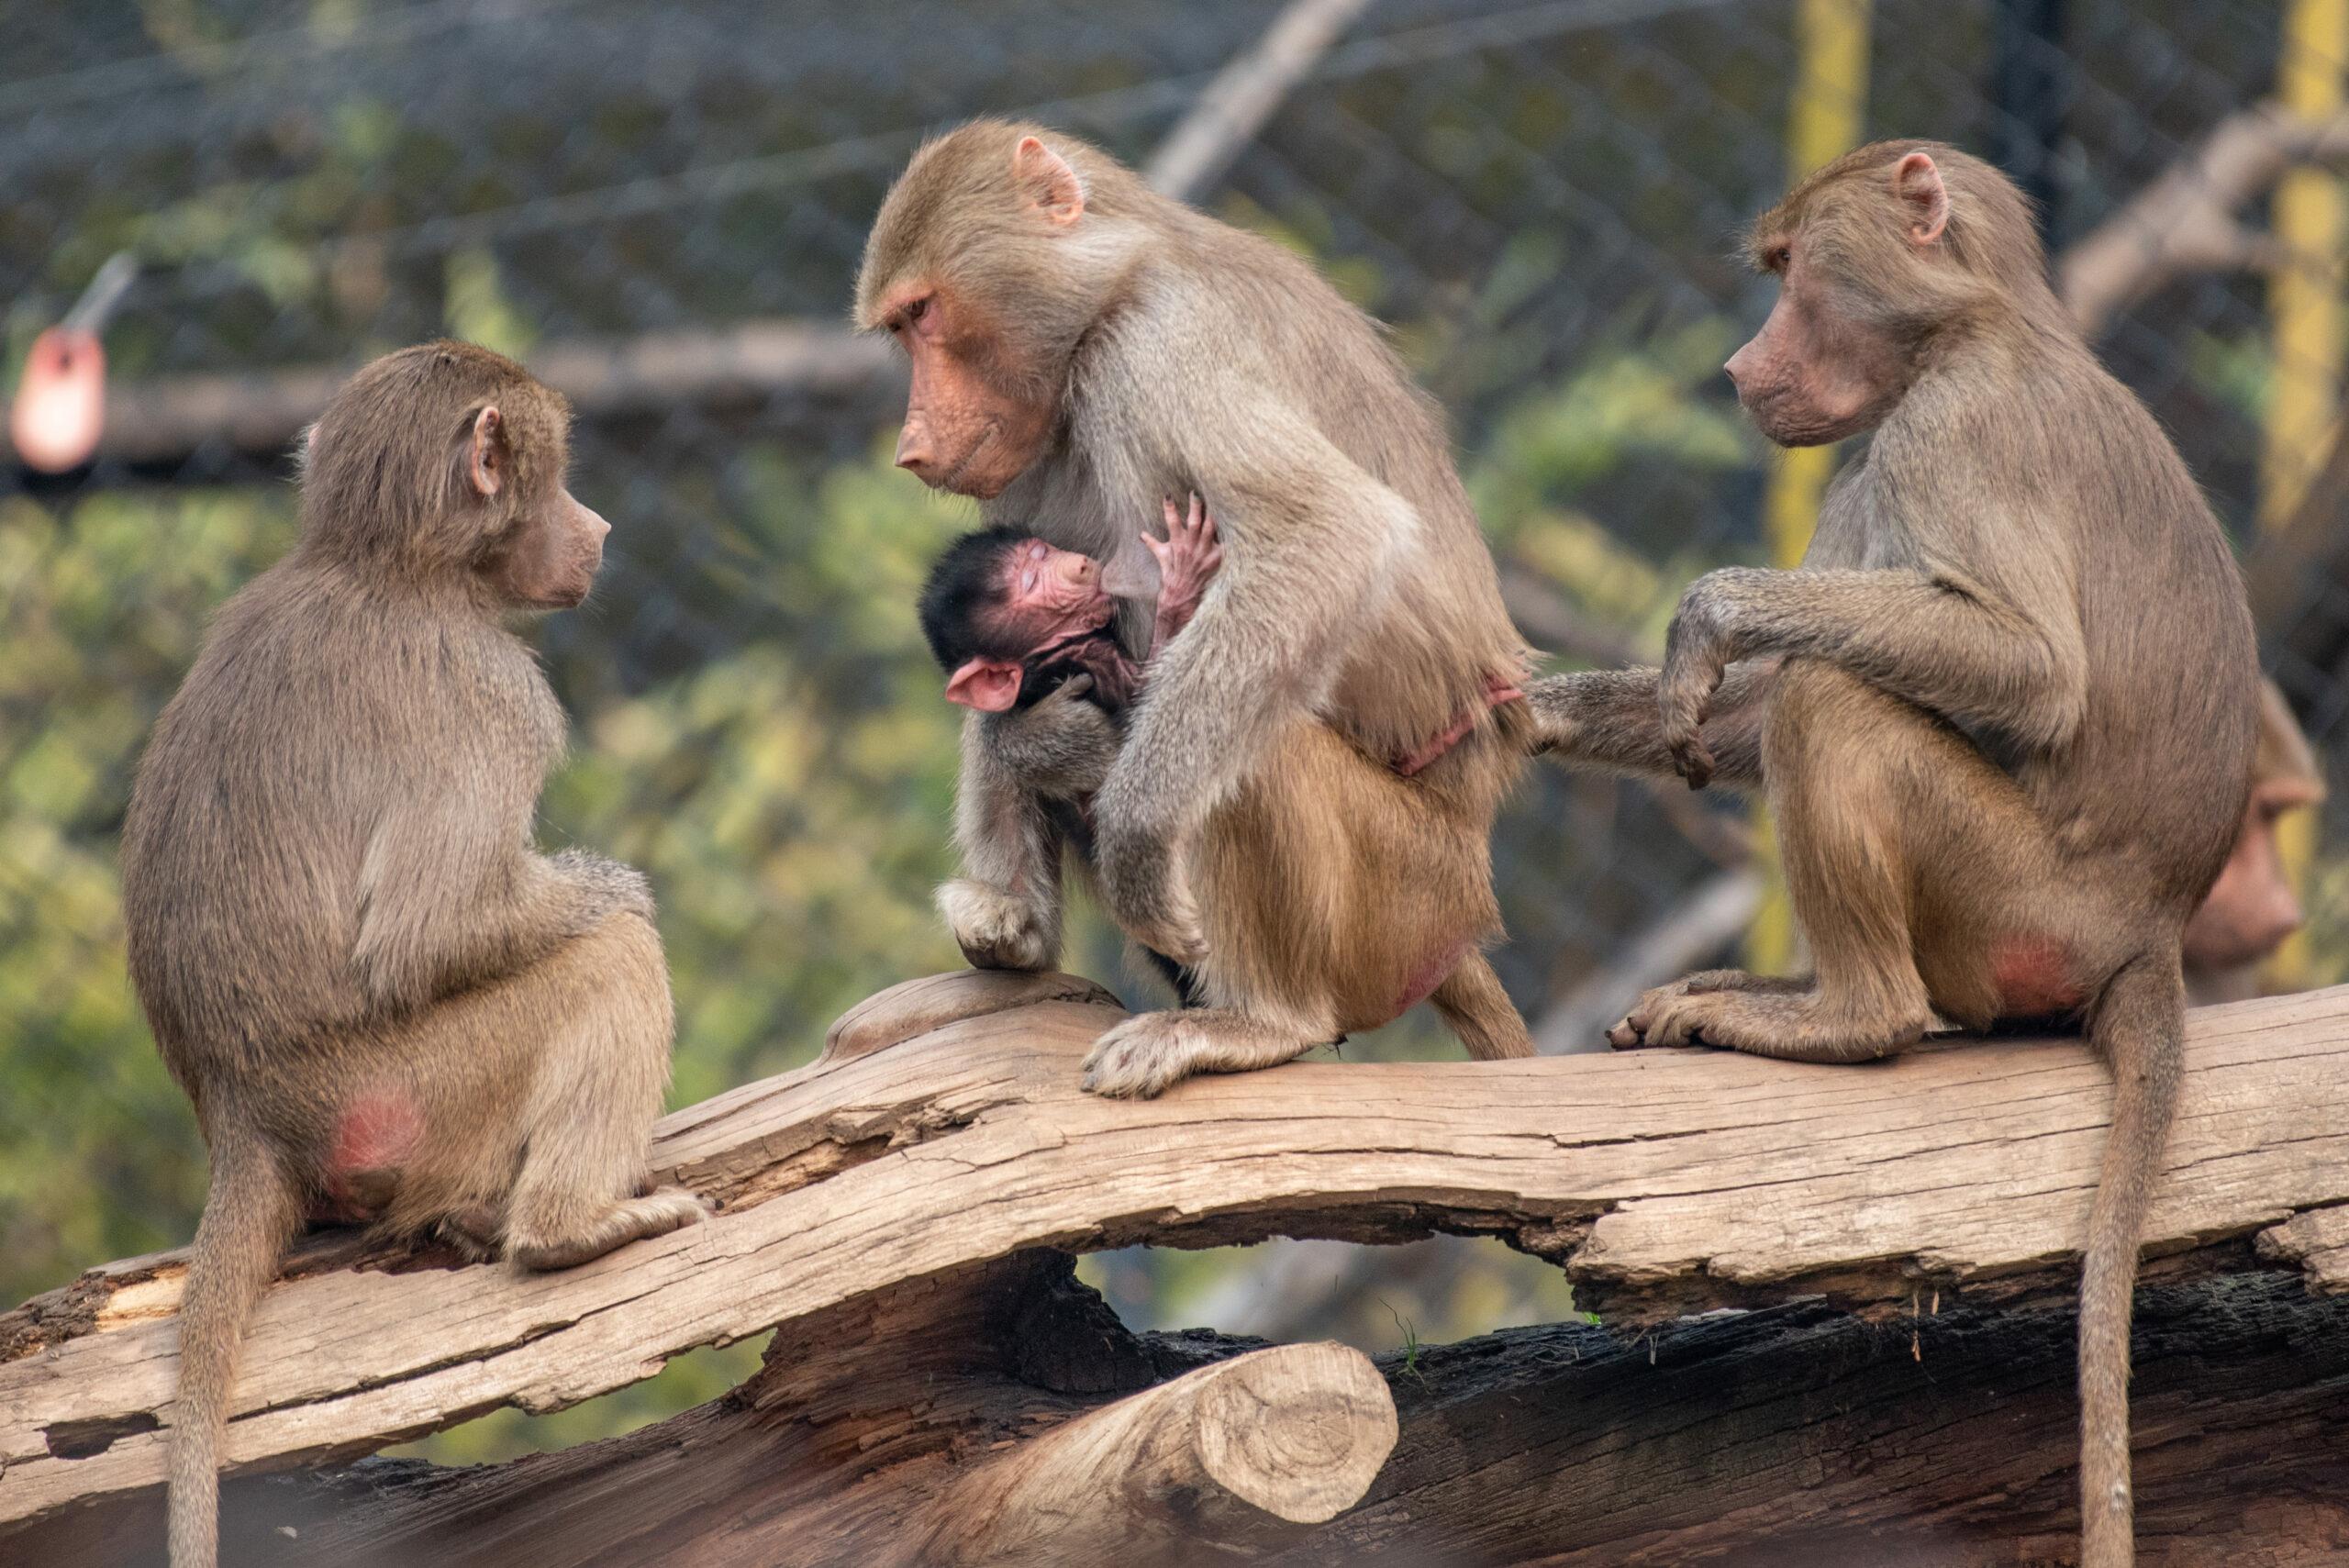 Meet Mousa the adorable baby baboon melting hearts at Oakland Zoo.